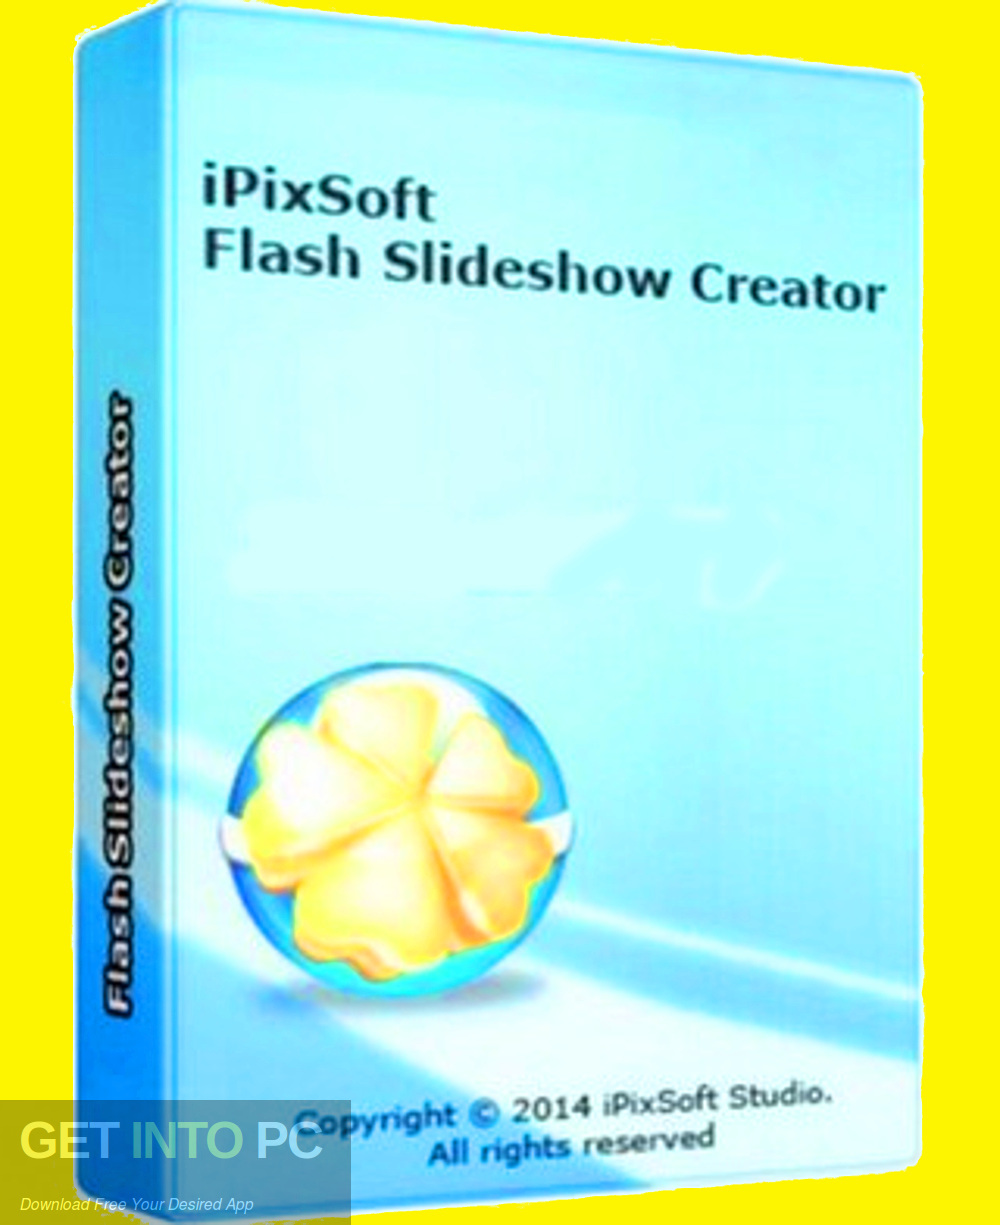 iPixSoft Flash Slideshow Creator Free Download-GetintoPC.com